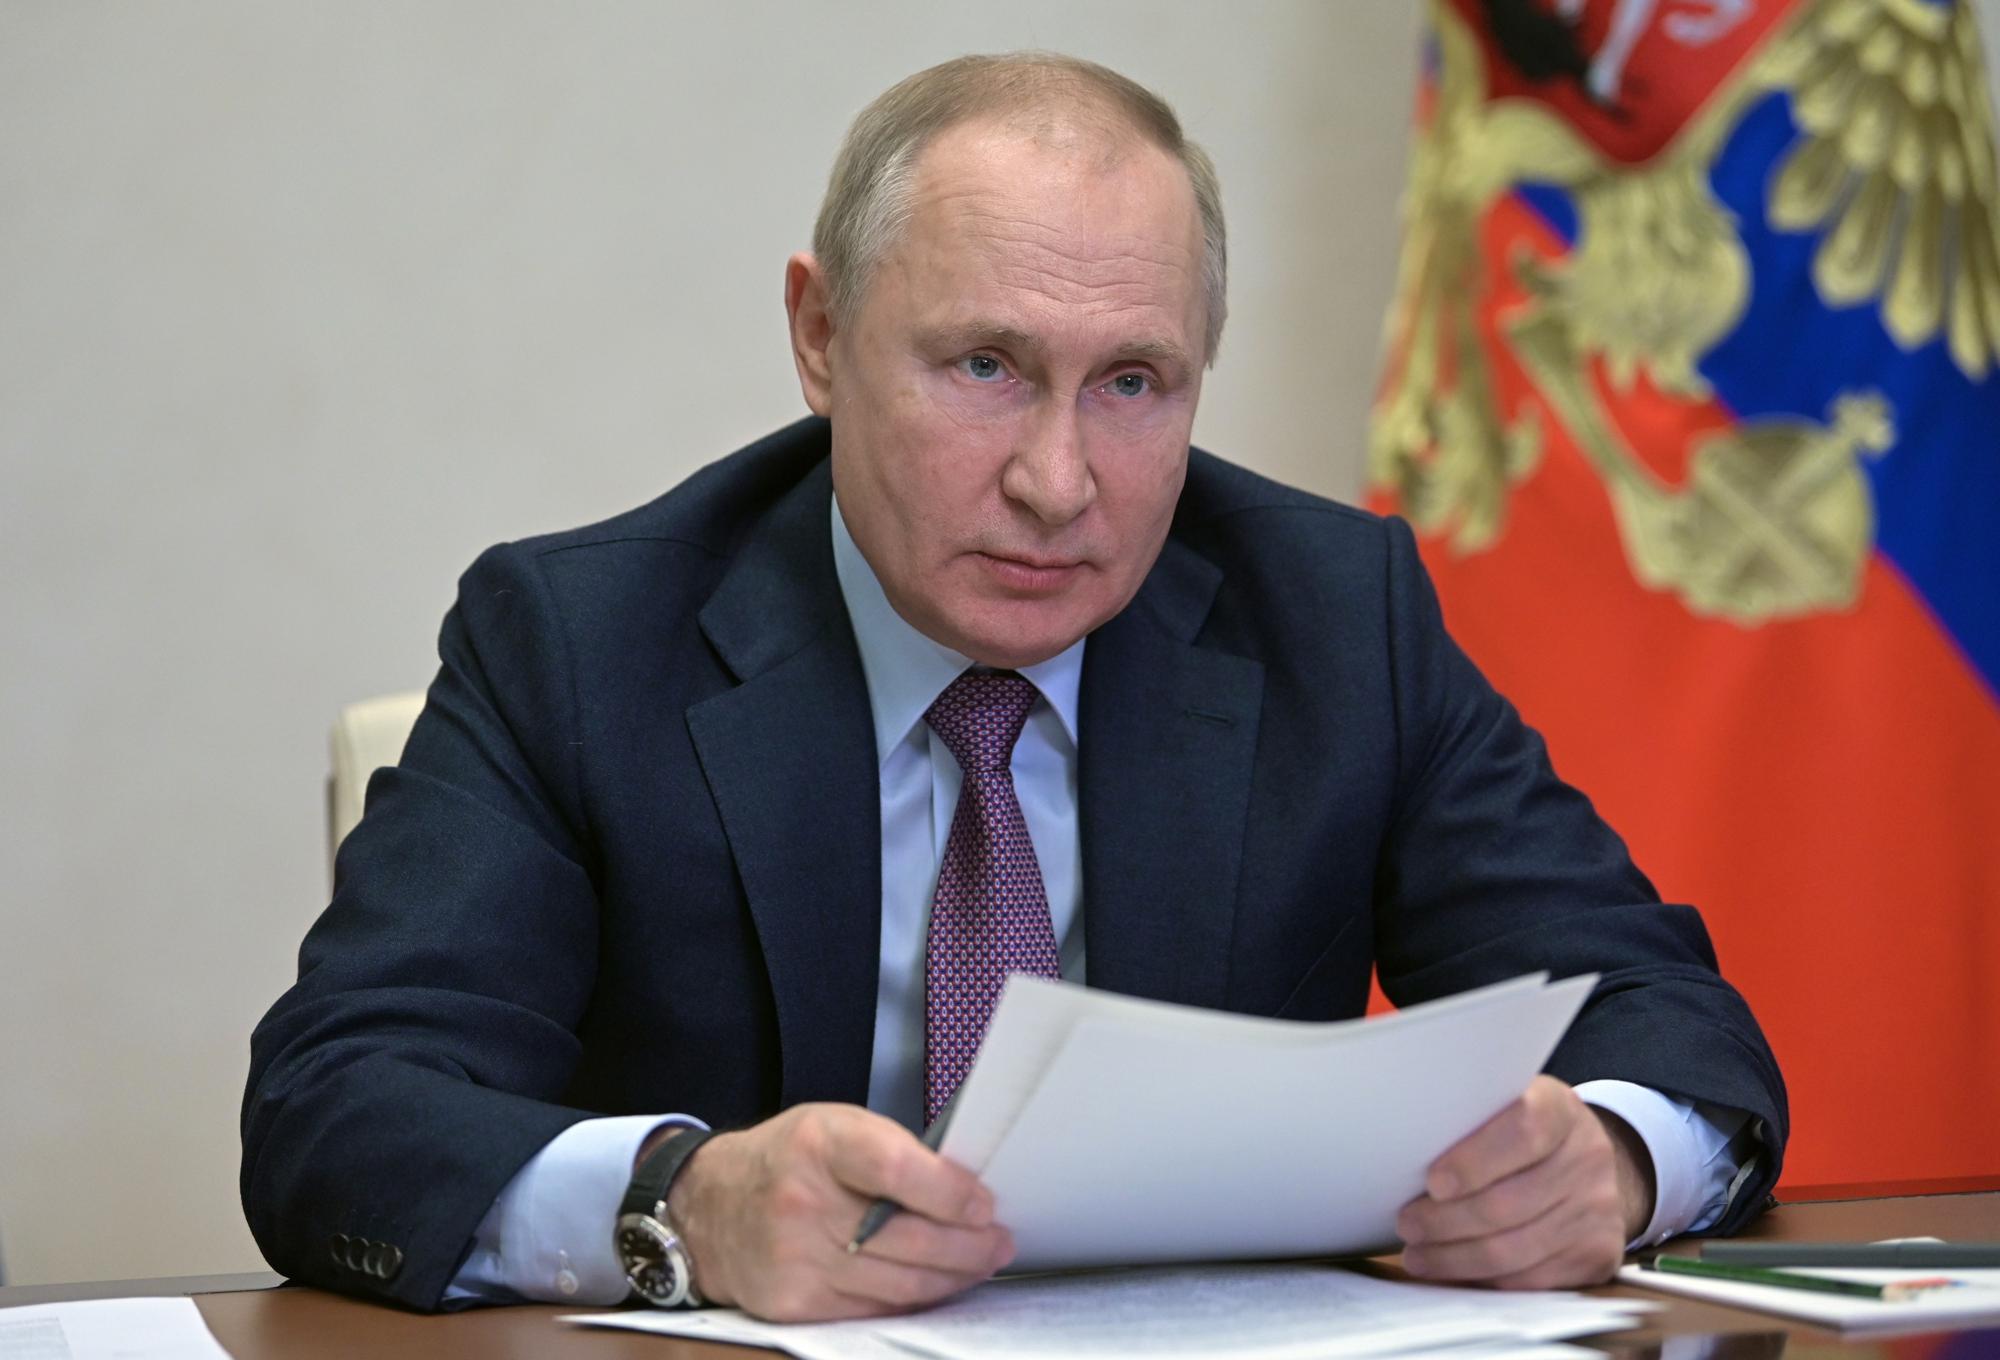 Putin to mull options if West refuses guarantees on Ukraine | AP News